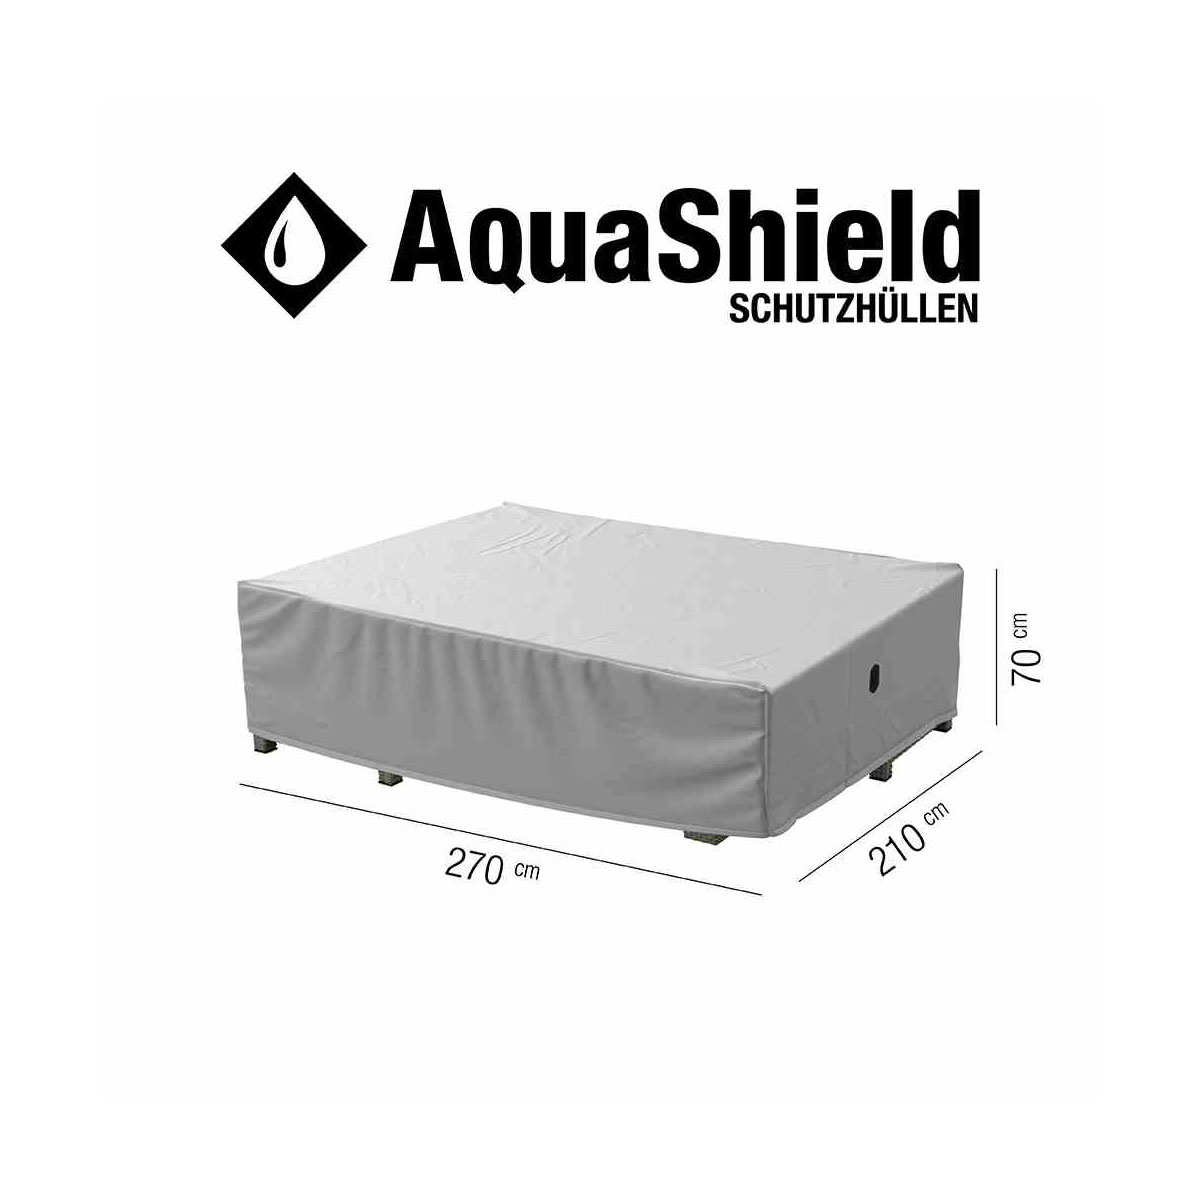 Schutzhülle „AquaShield“ für Lounge, 270x210x70 cm, hellgrau